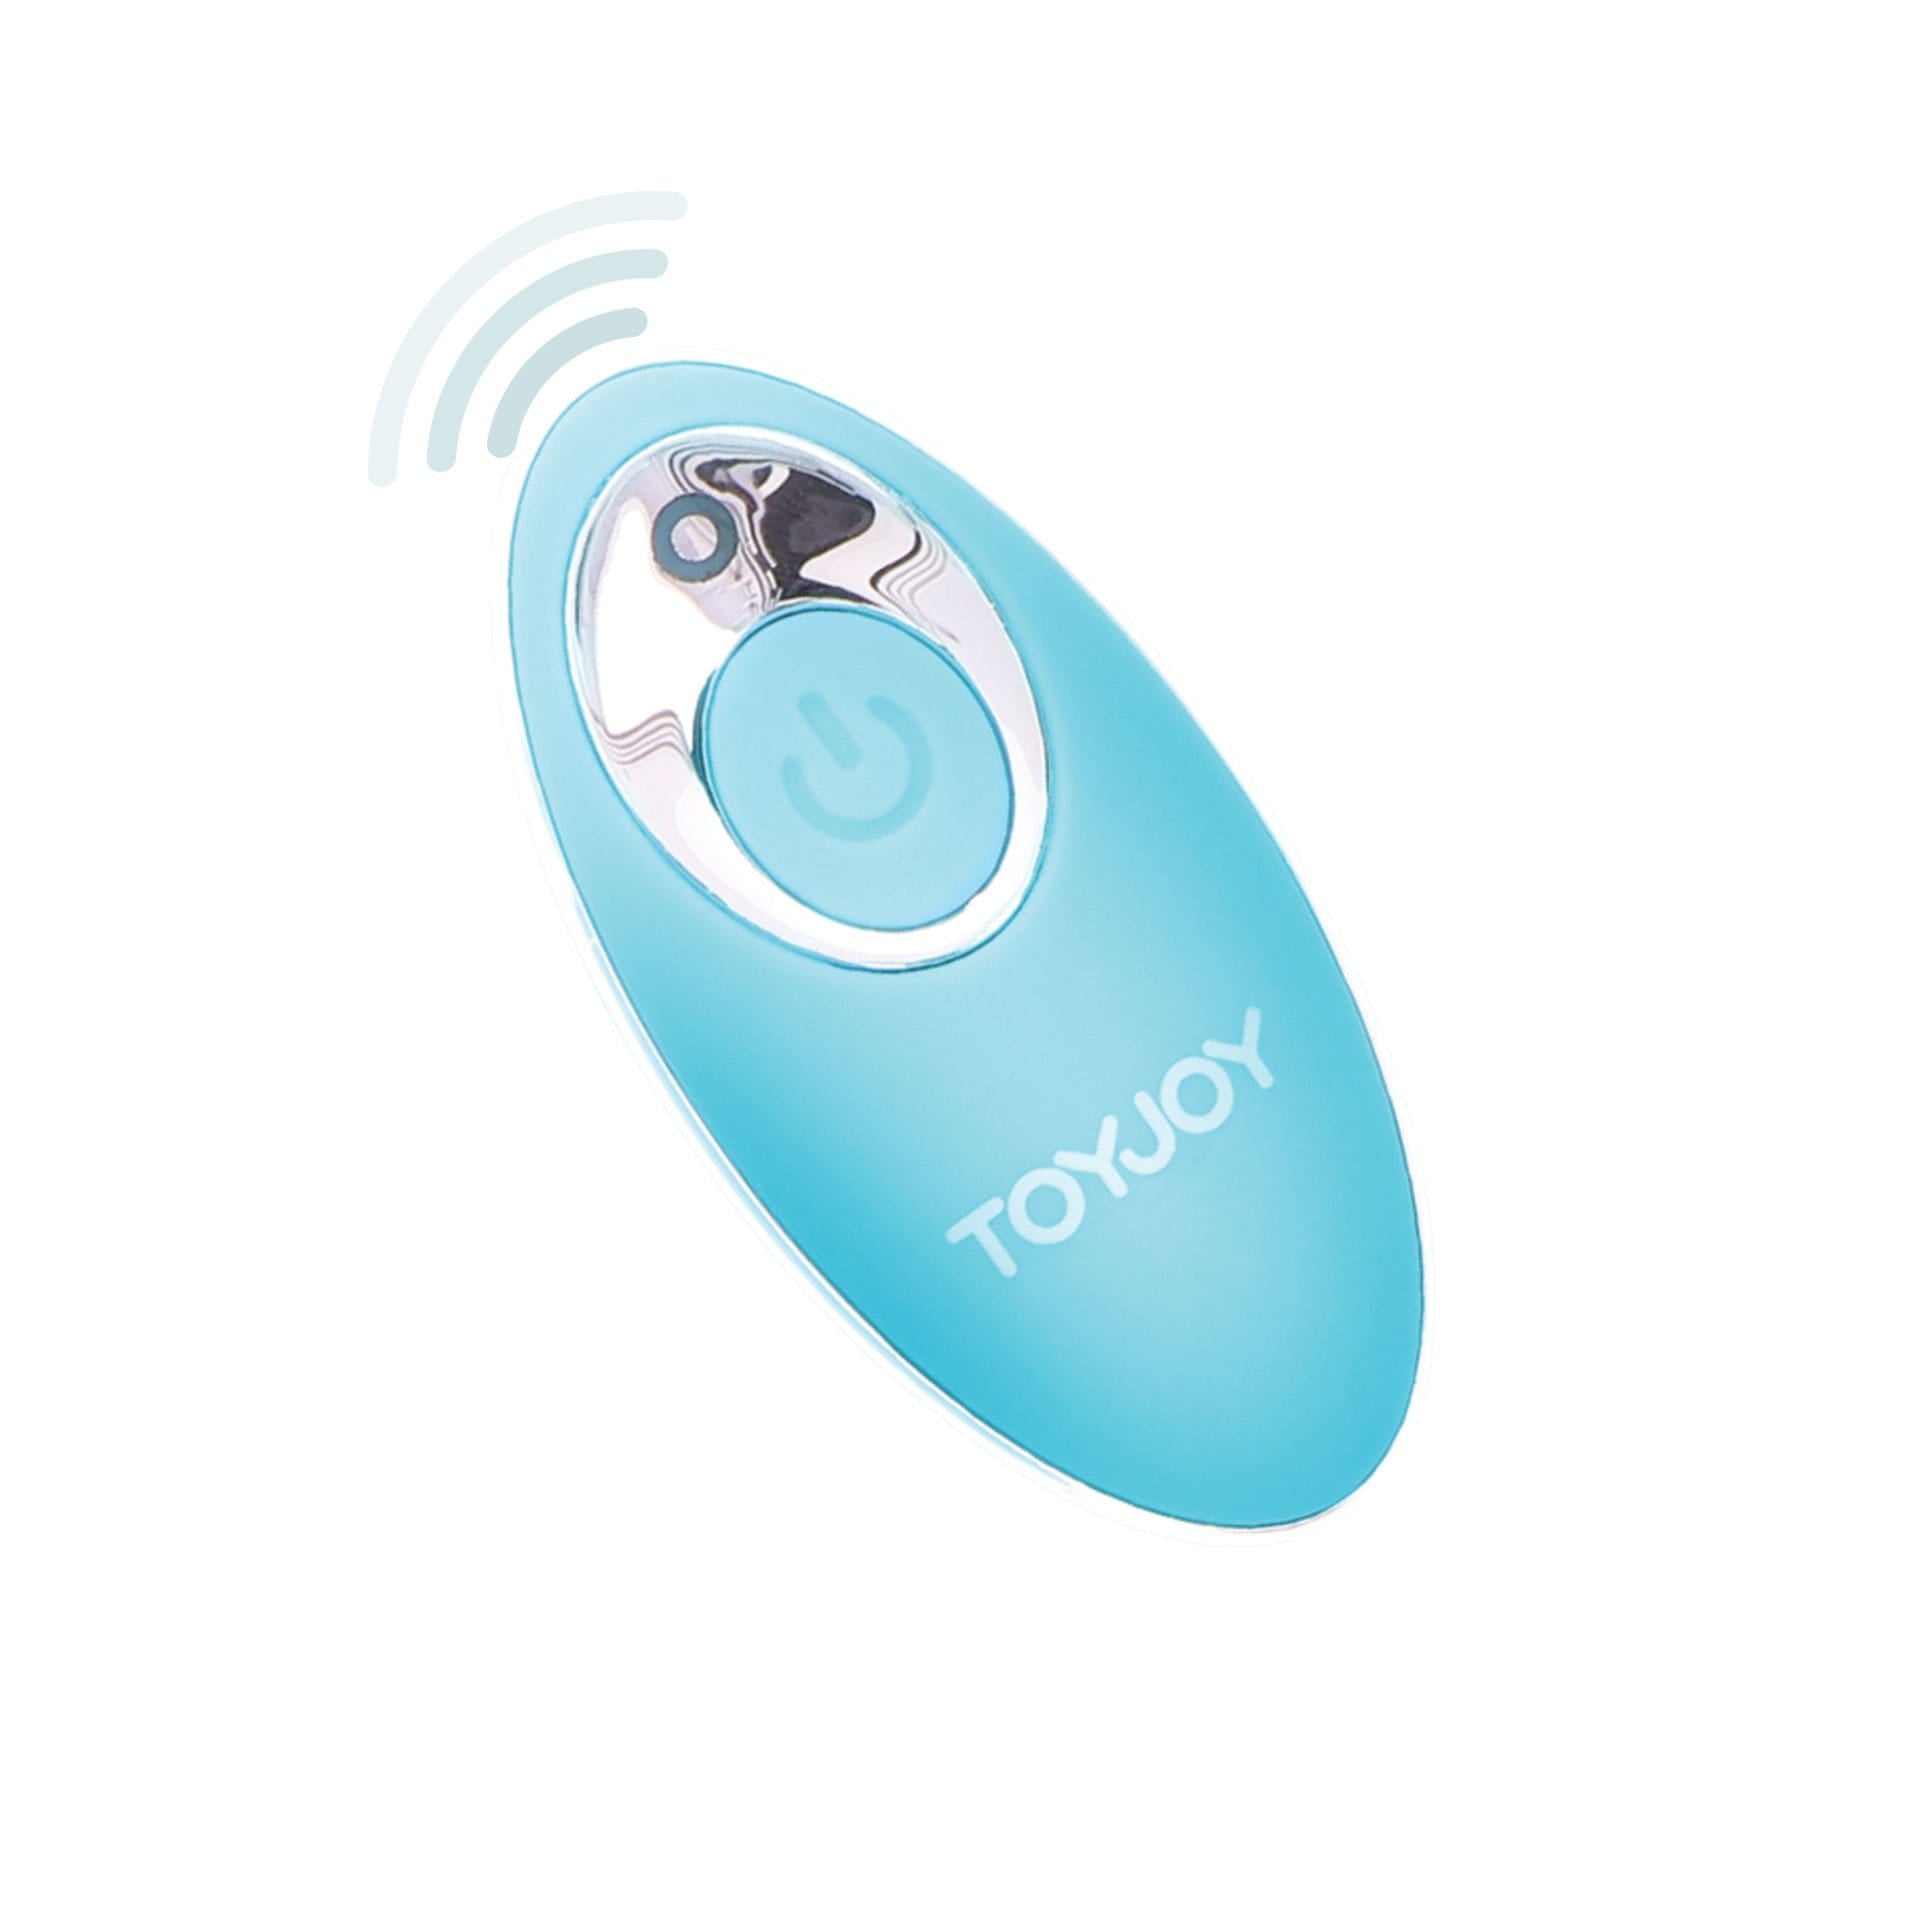 ToyJoy - I'm So Eggcited Remote Control Egg Vibrator (Blue) -  Wireless Remote Control Egg (Vibration) Rechargeable  Durio.sg